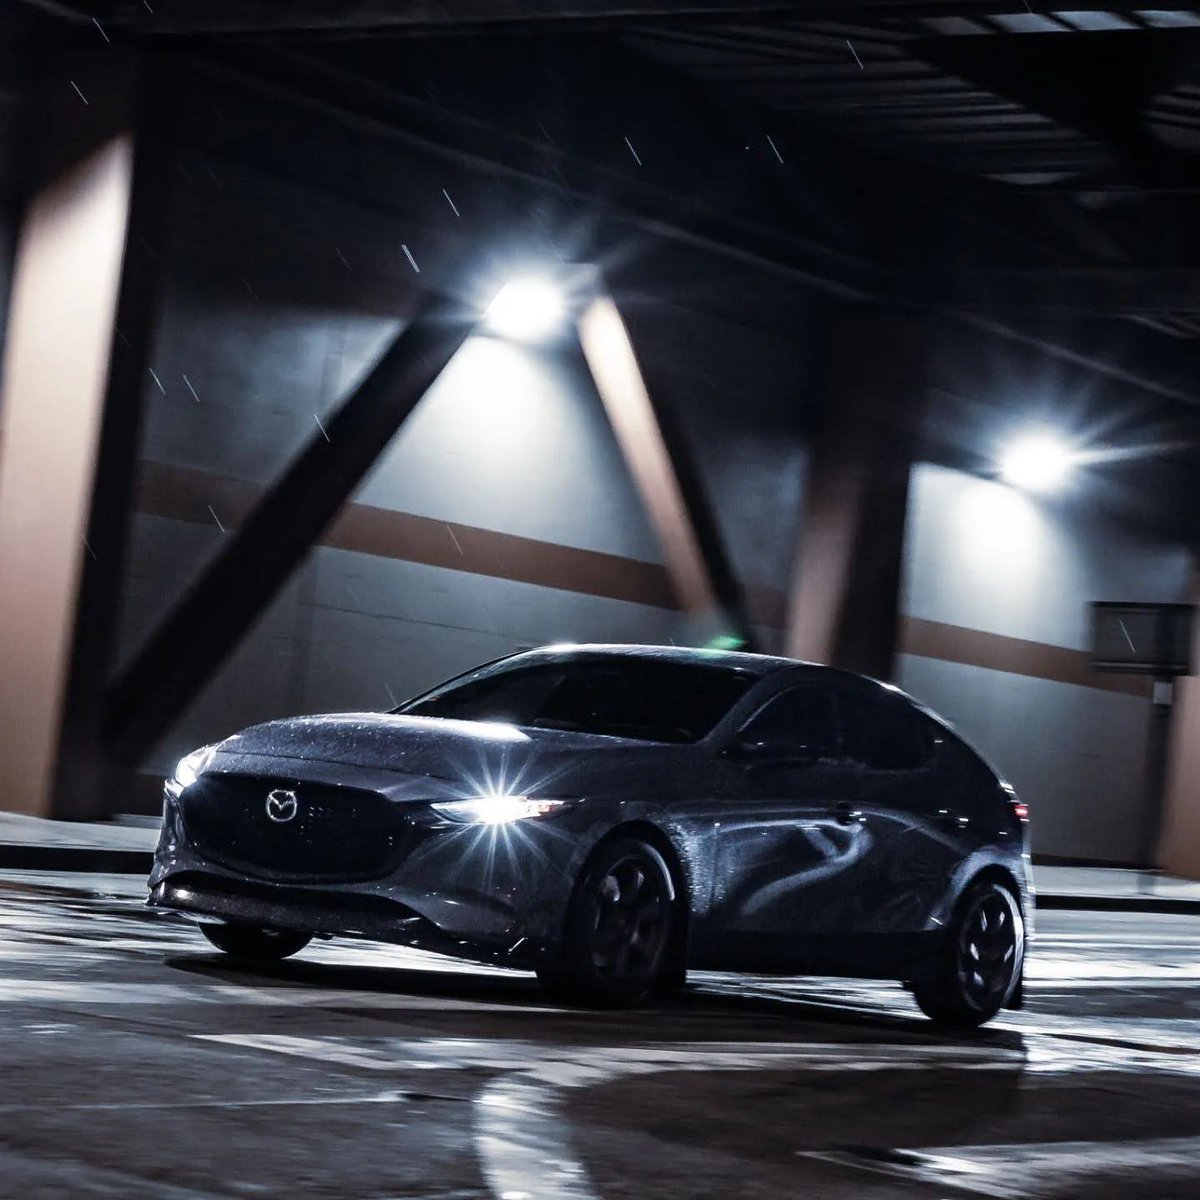 Unleash the thrill of precision engineering with the MX30.
#Mazda #MazdaofEverett